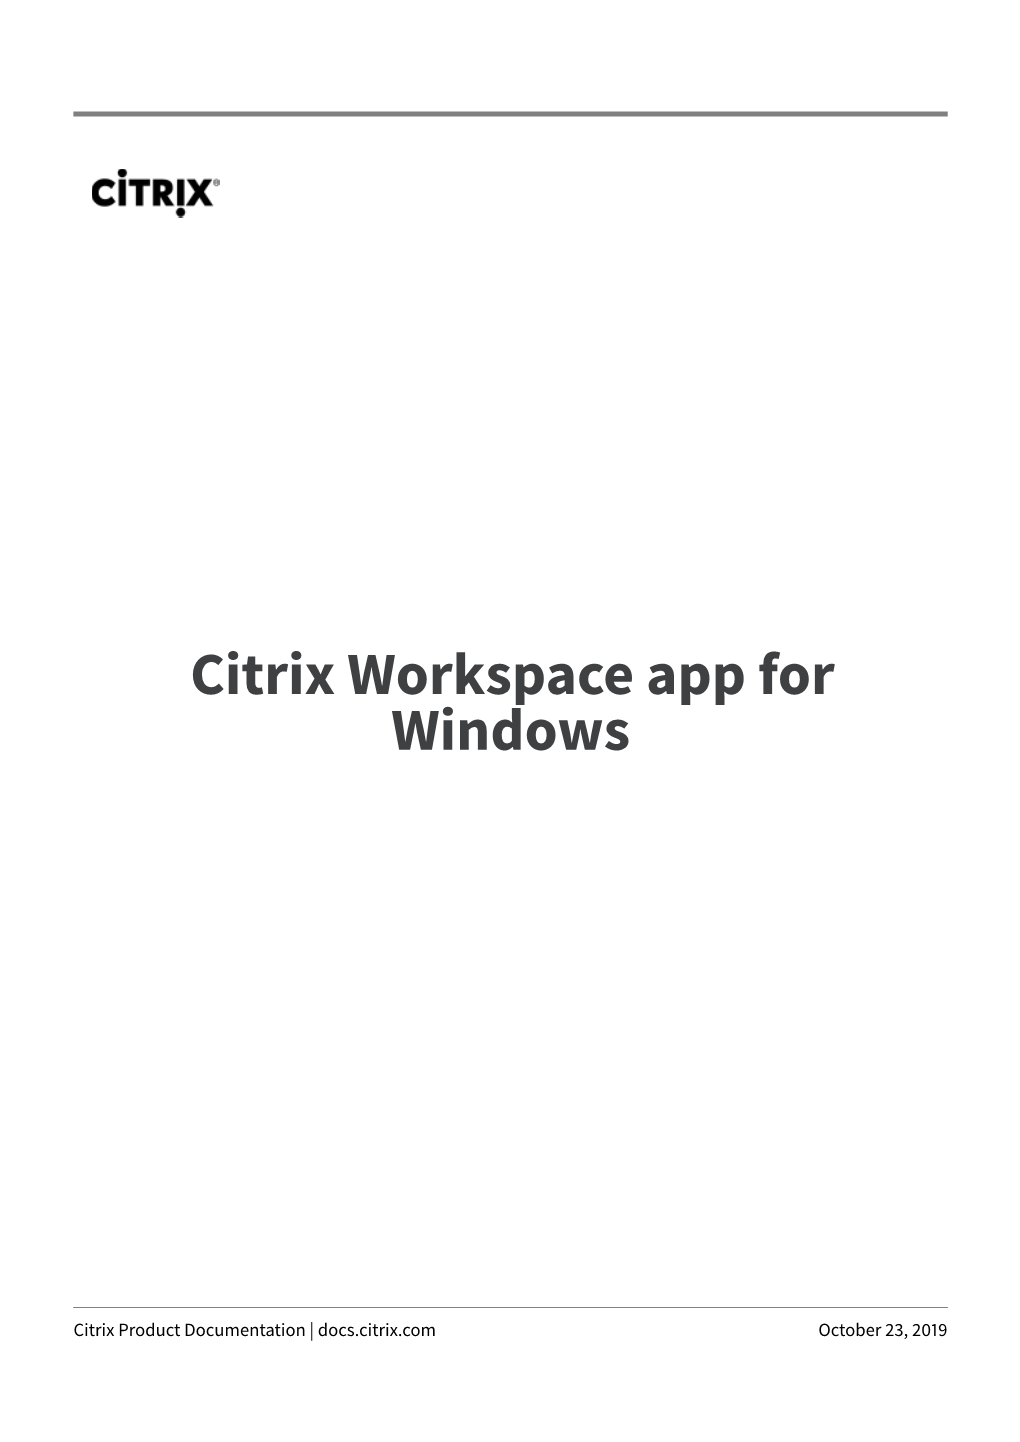 Citrix Workspace App 1909 for Windows